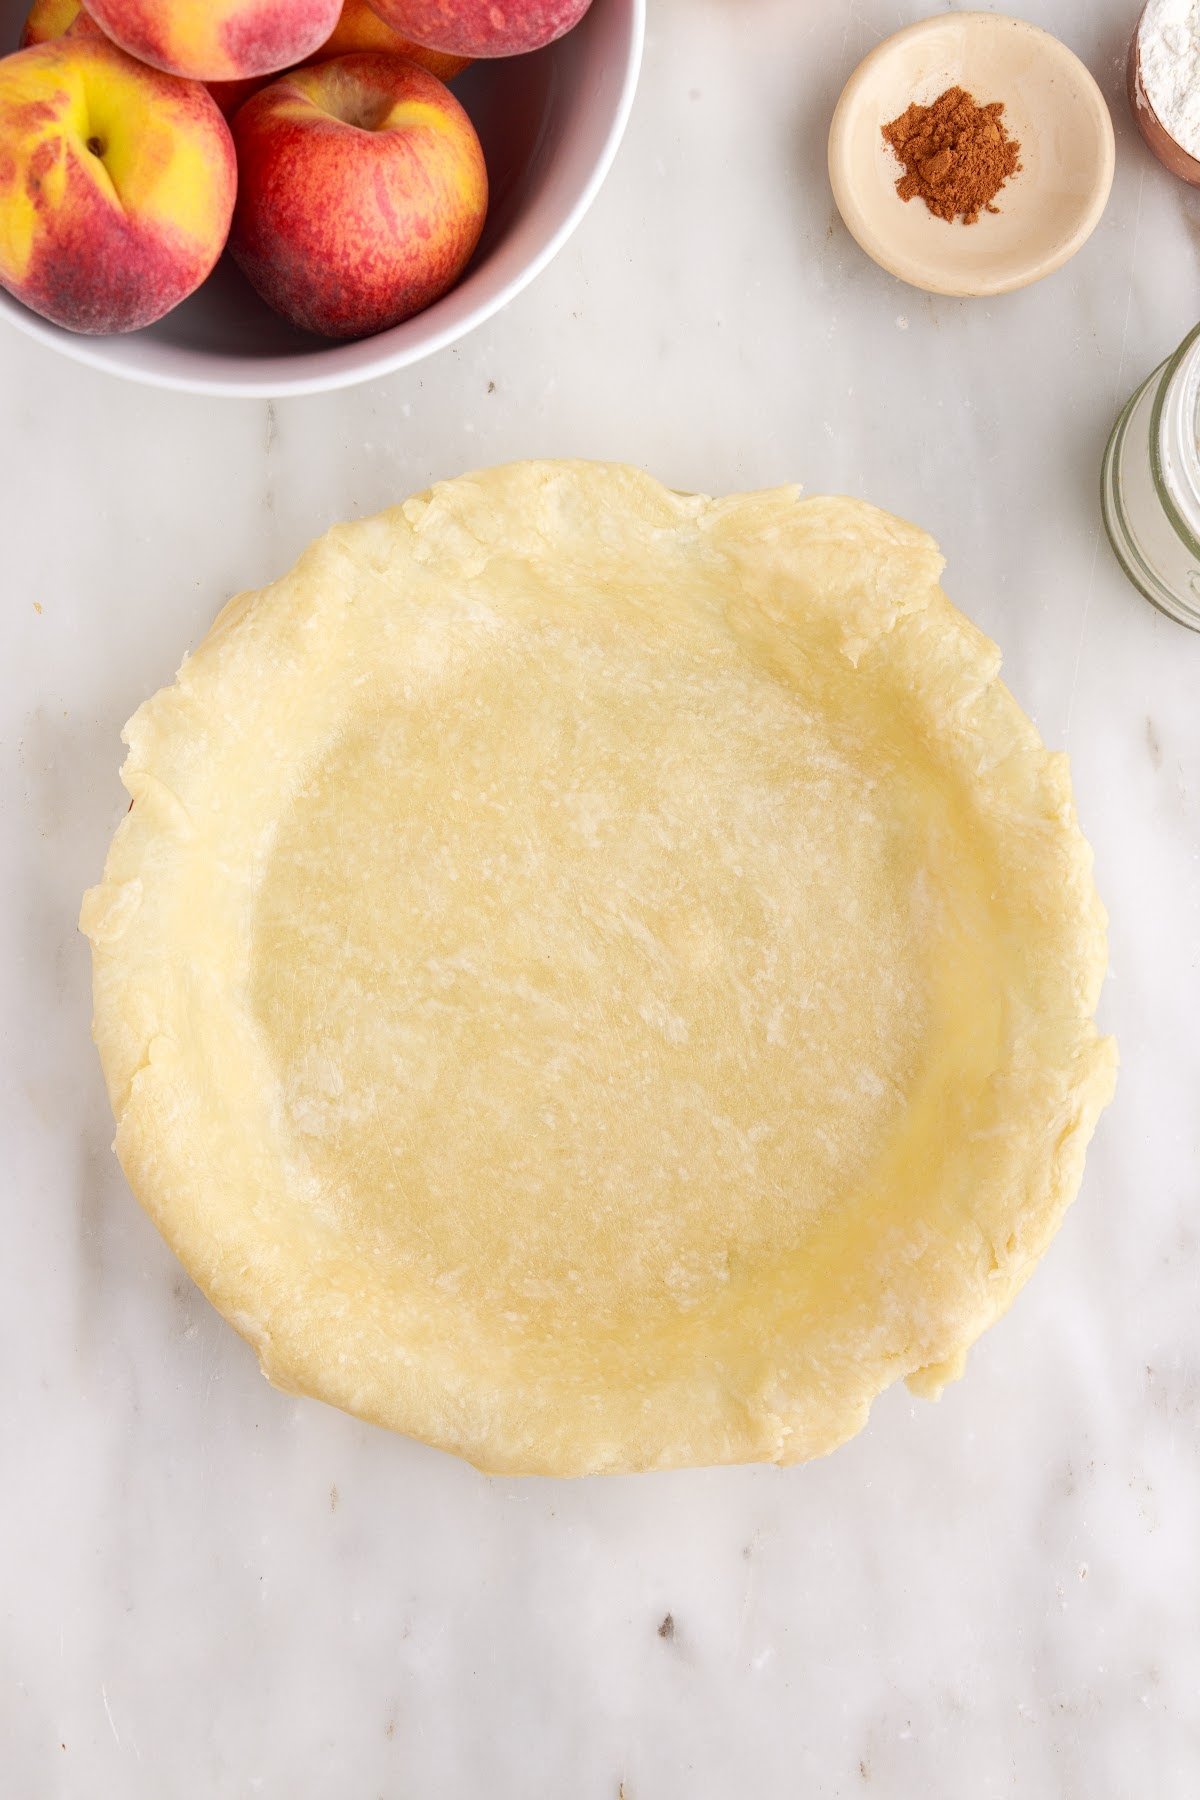 Pie dough on the bottom of the pie dish.